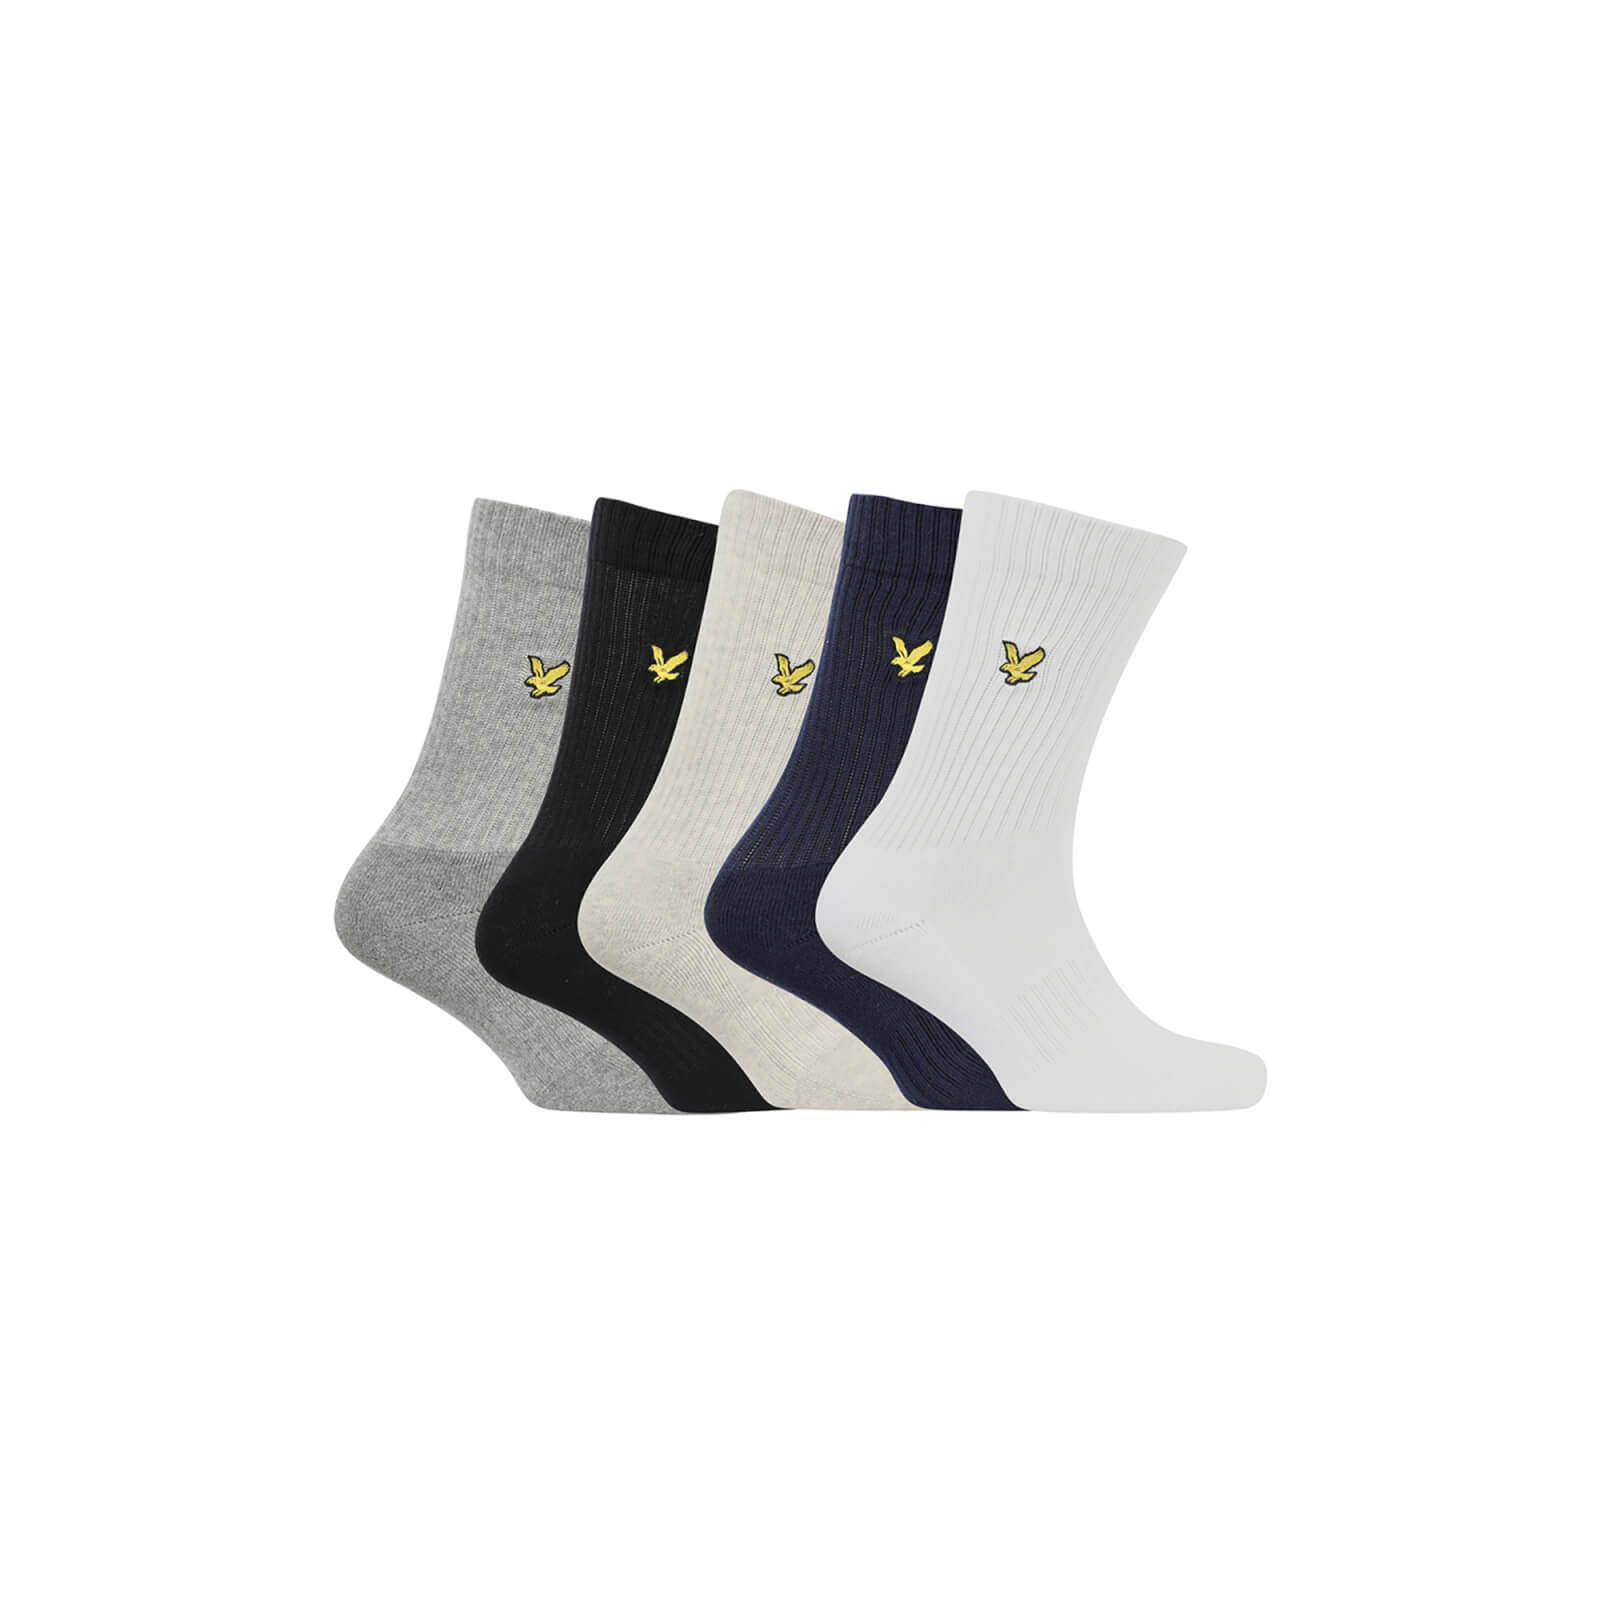 

Lyle & Scott Men's 5 Pack Plain Tubular Sock - Black/Bright White/Grey Marl/Peacoat/Light Grey Marl - One Size